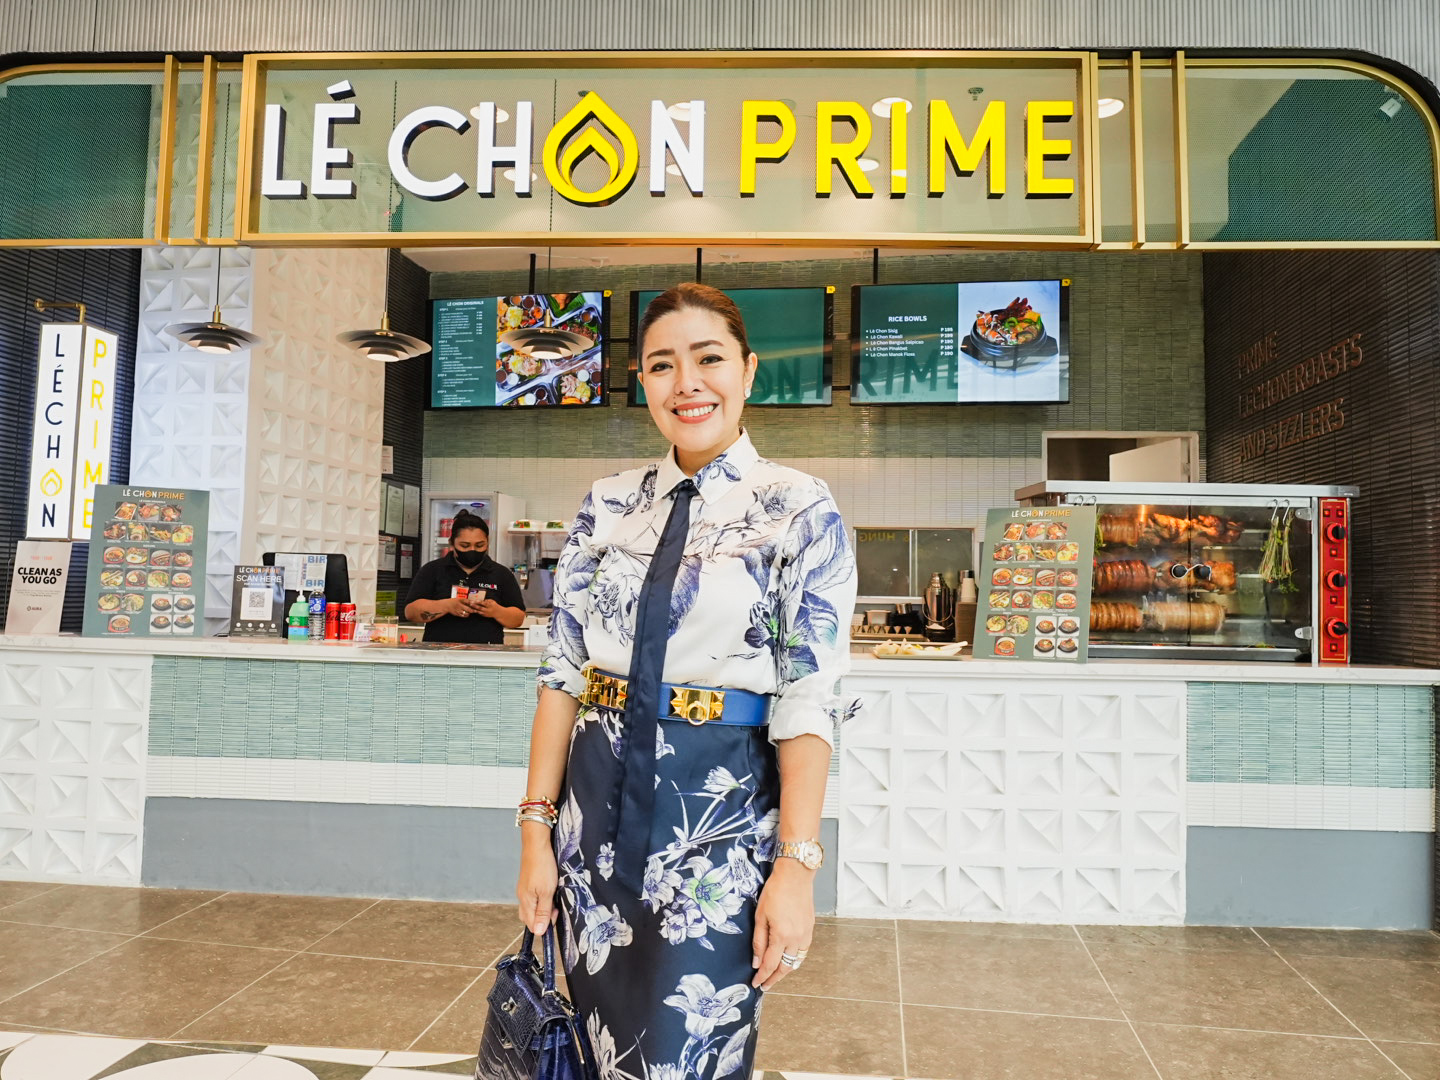 The woman behind Le Chon Prime, Happy Ongpauco-Tiu